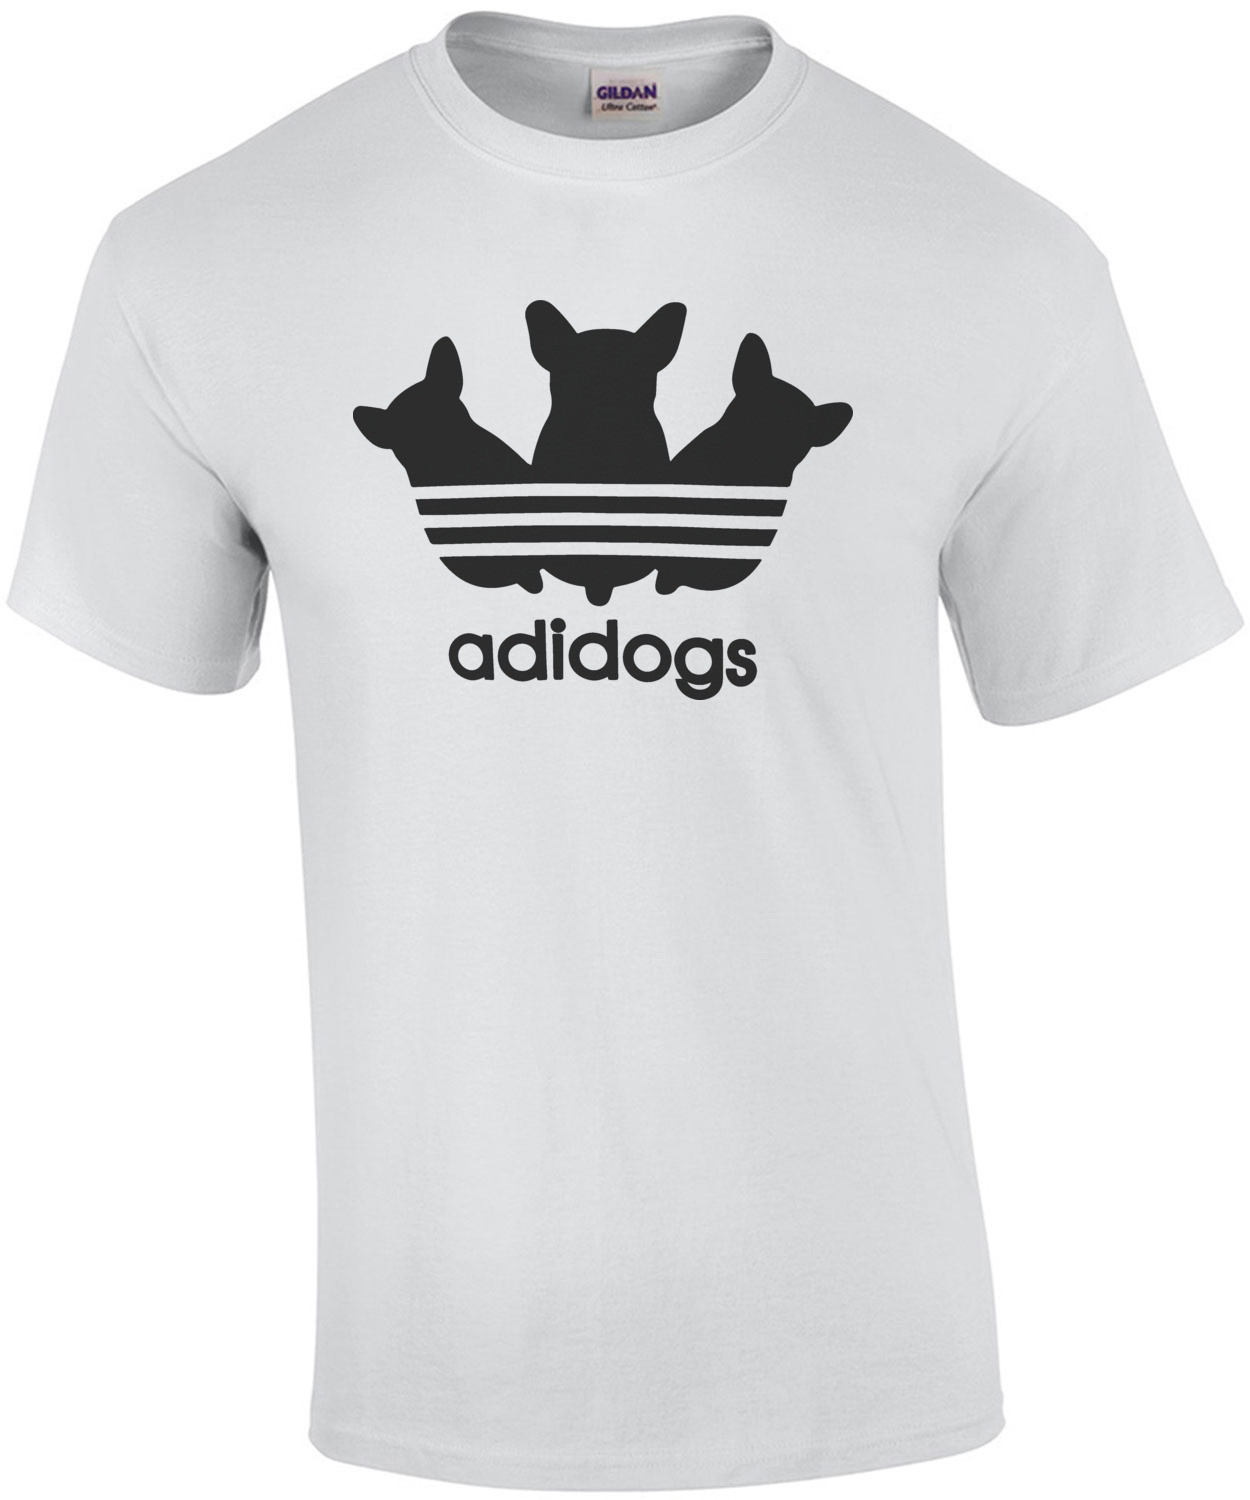 Adidogs - Funny Adidas Parody T-Shirt